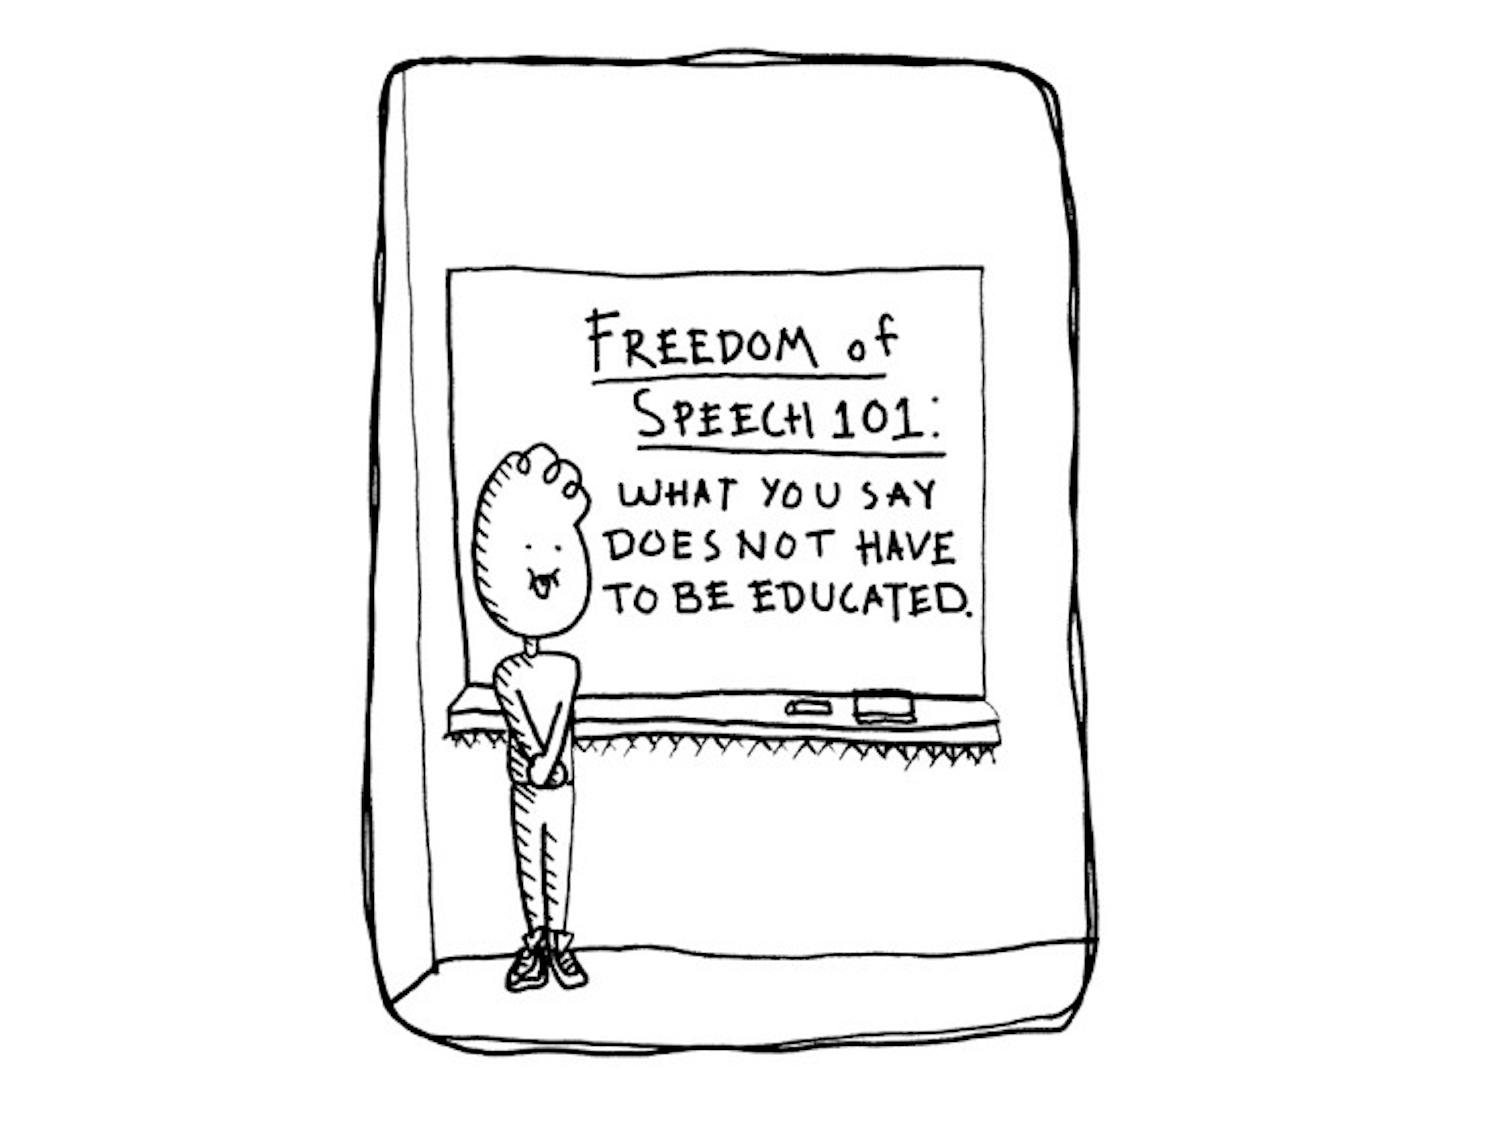 Freedom of Speech Cartoon Online.jpg